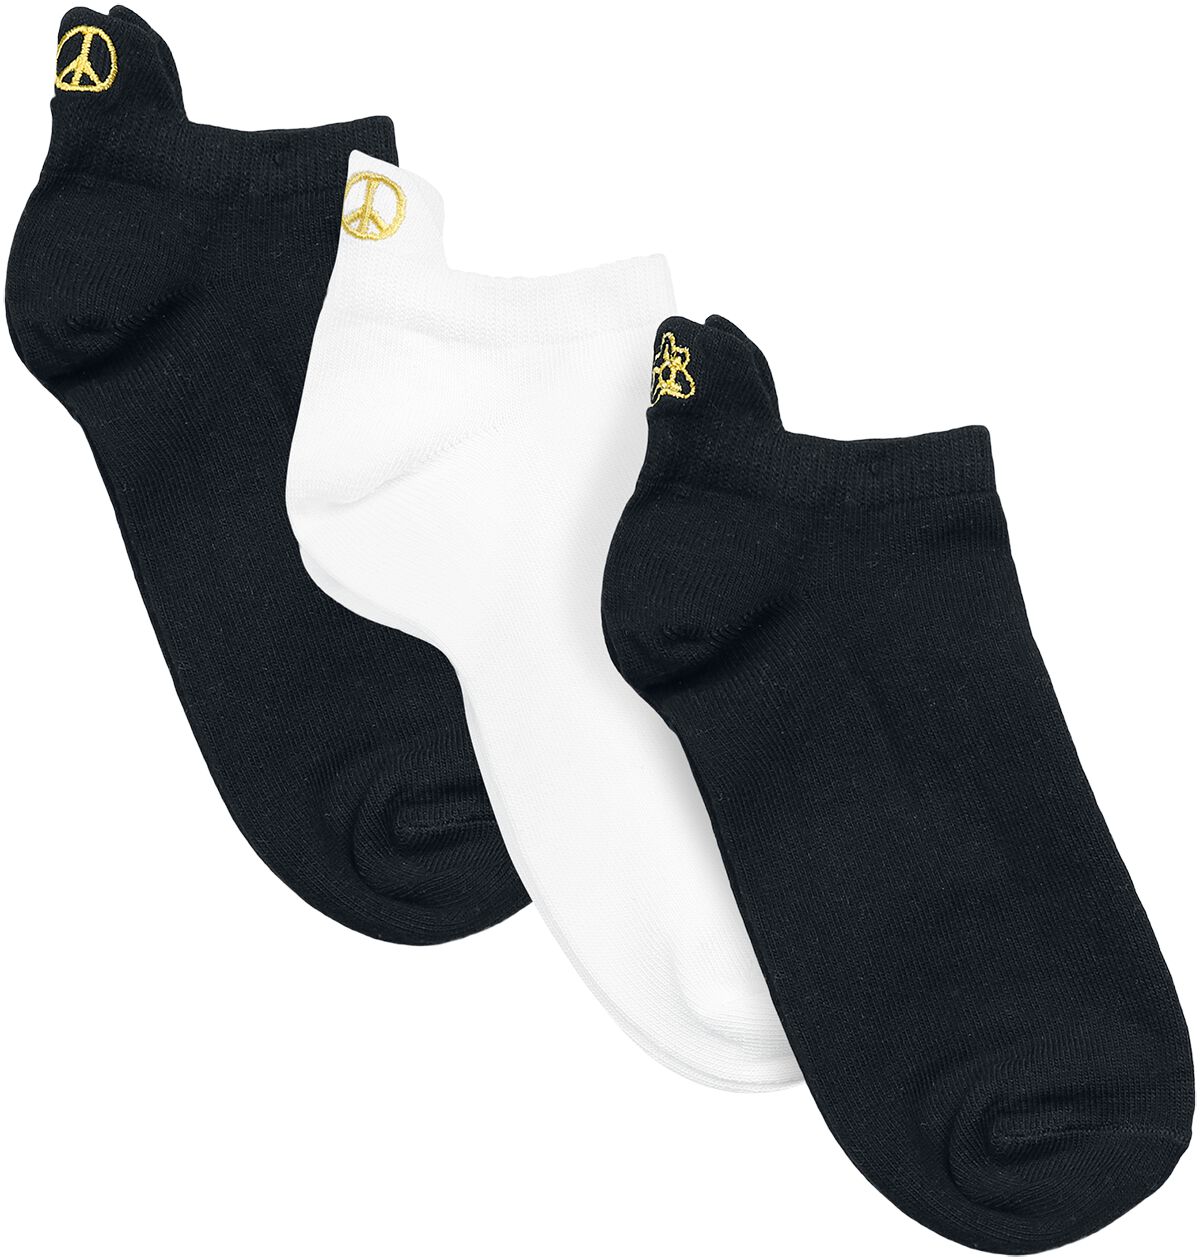 Urban Classics Peace Fancy Edge No Show Socks 3-Pack Socken schwarz weiß in EU 39-42